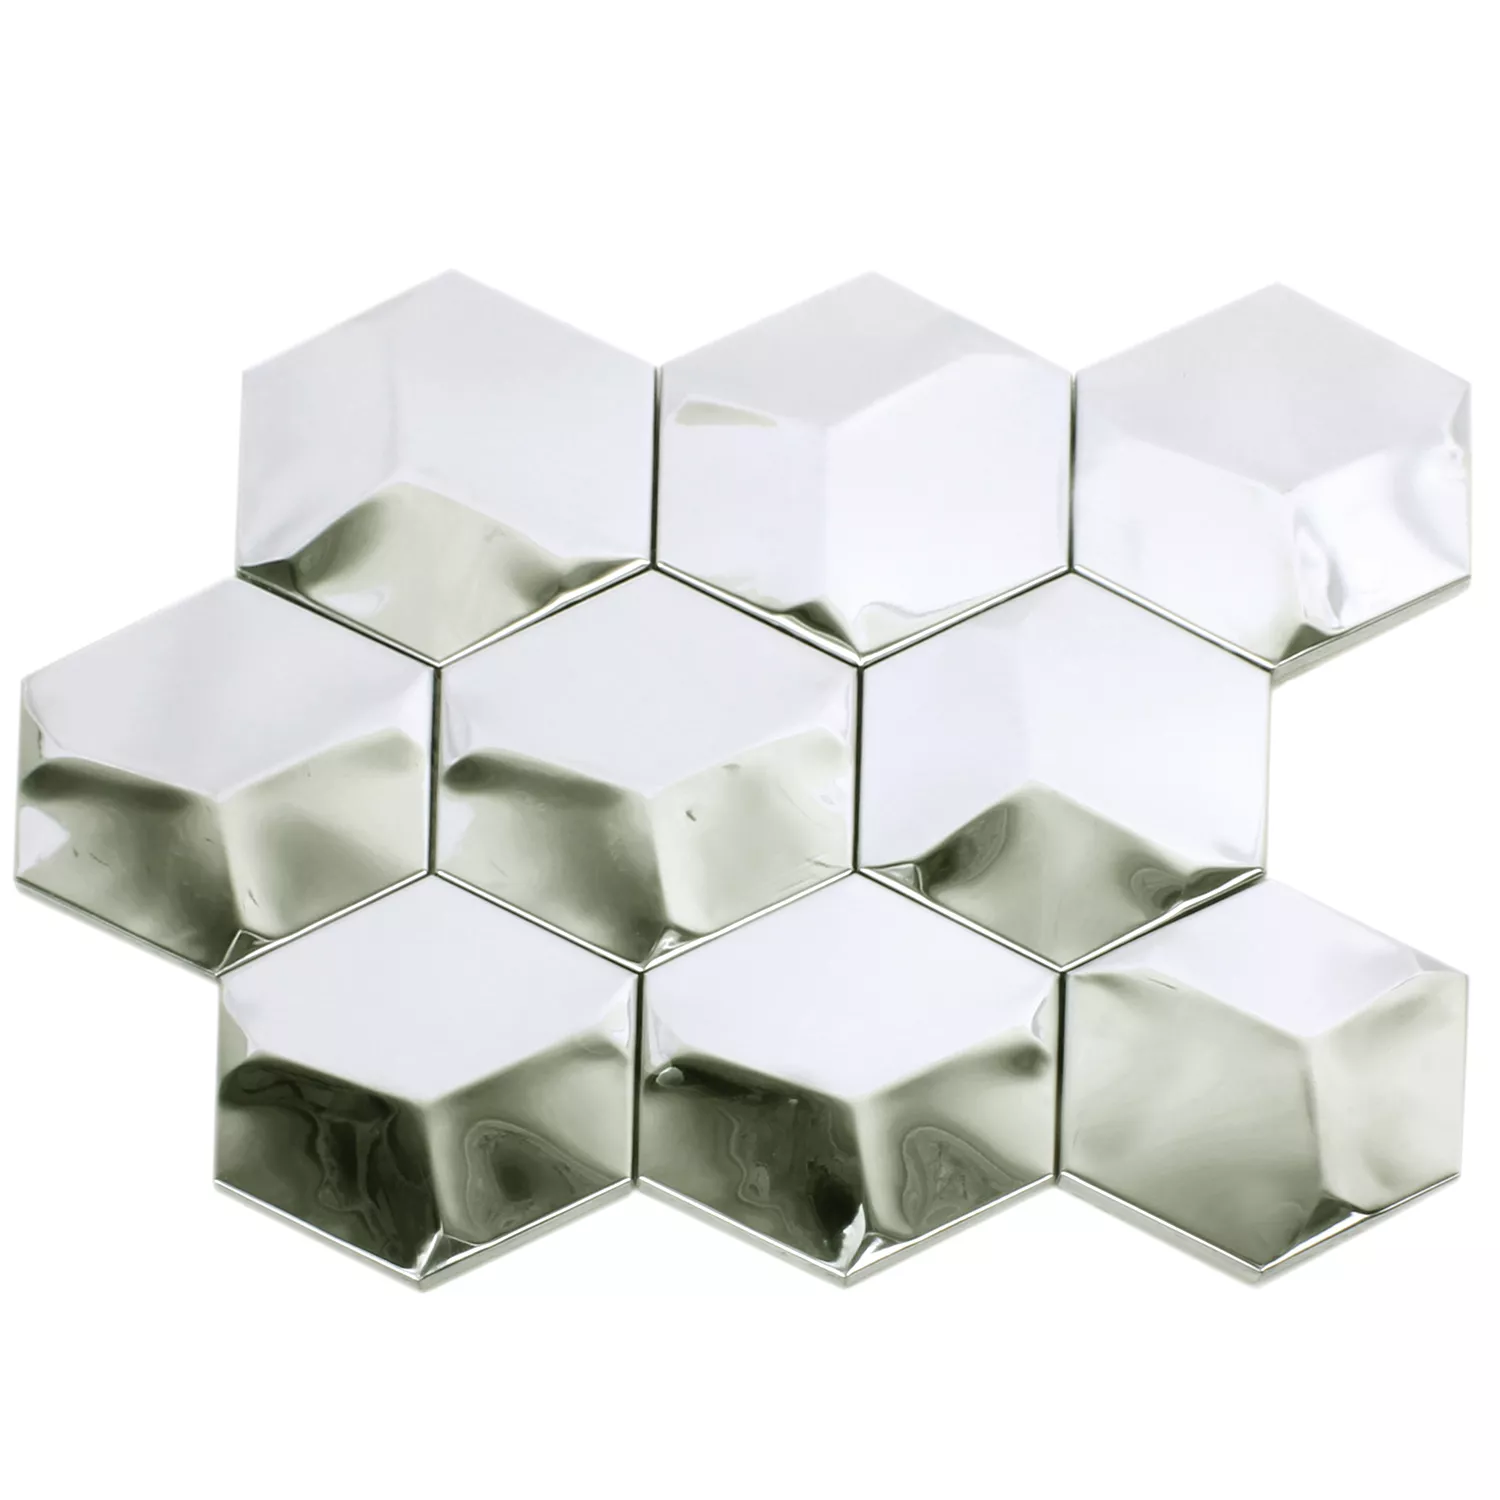 Sample Mosaic Tiles Stainless Steel Contender Hexagon Glossy